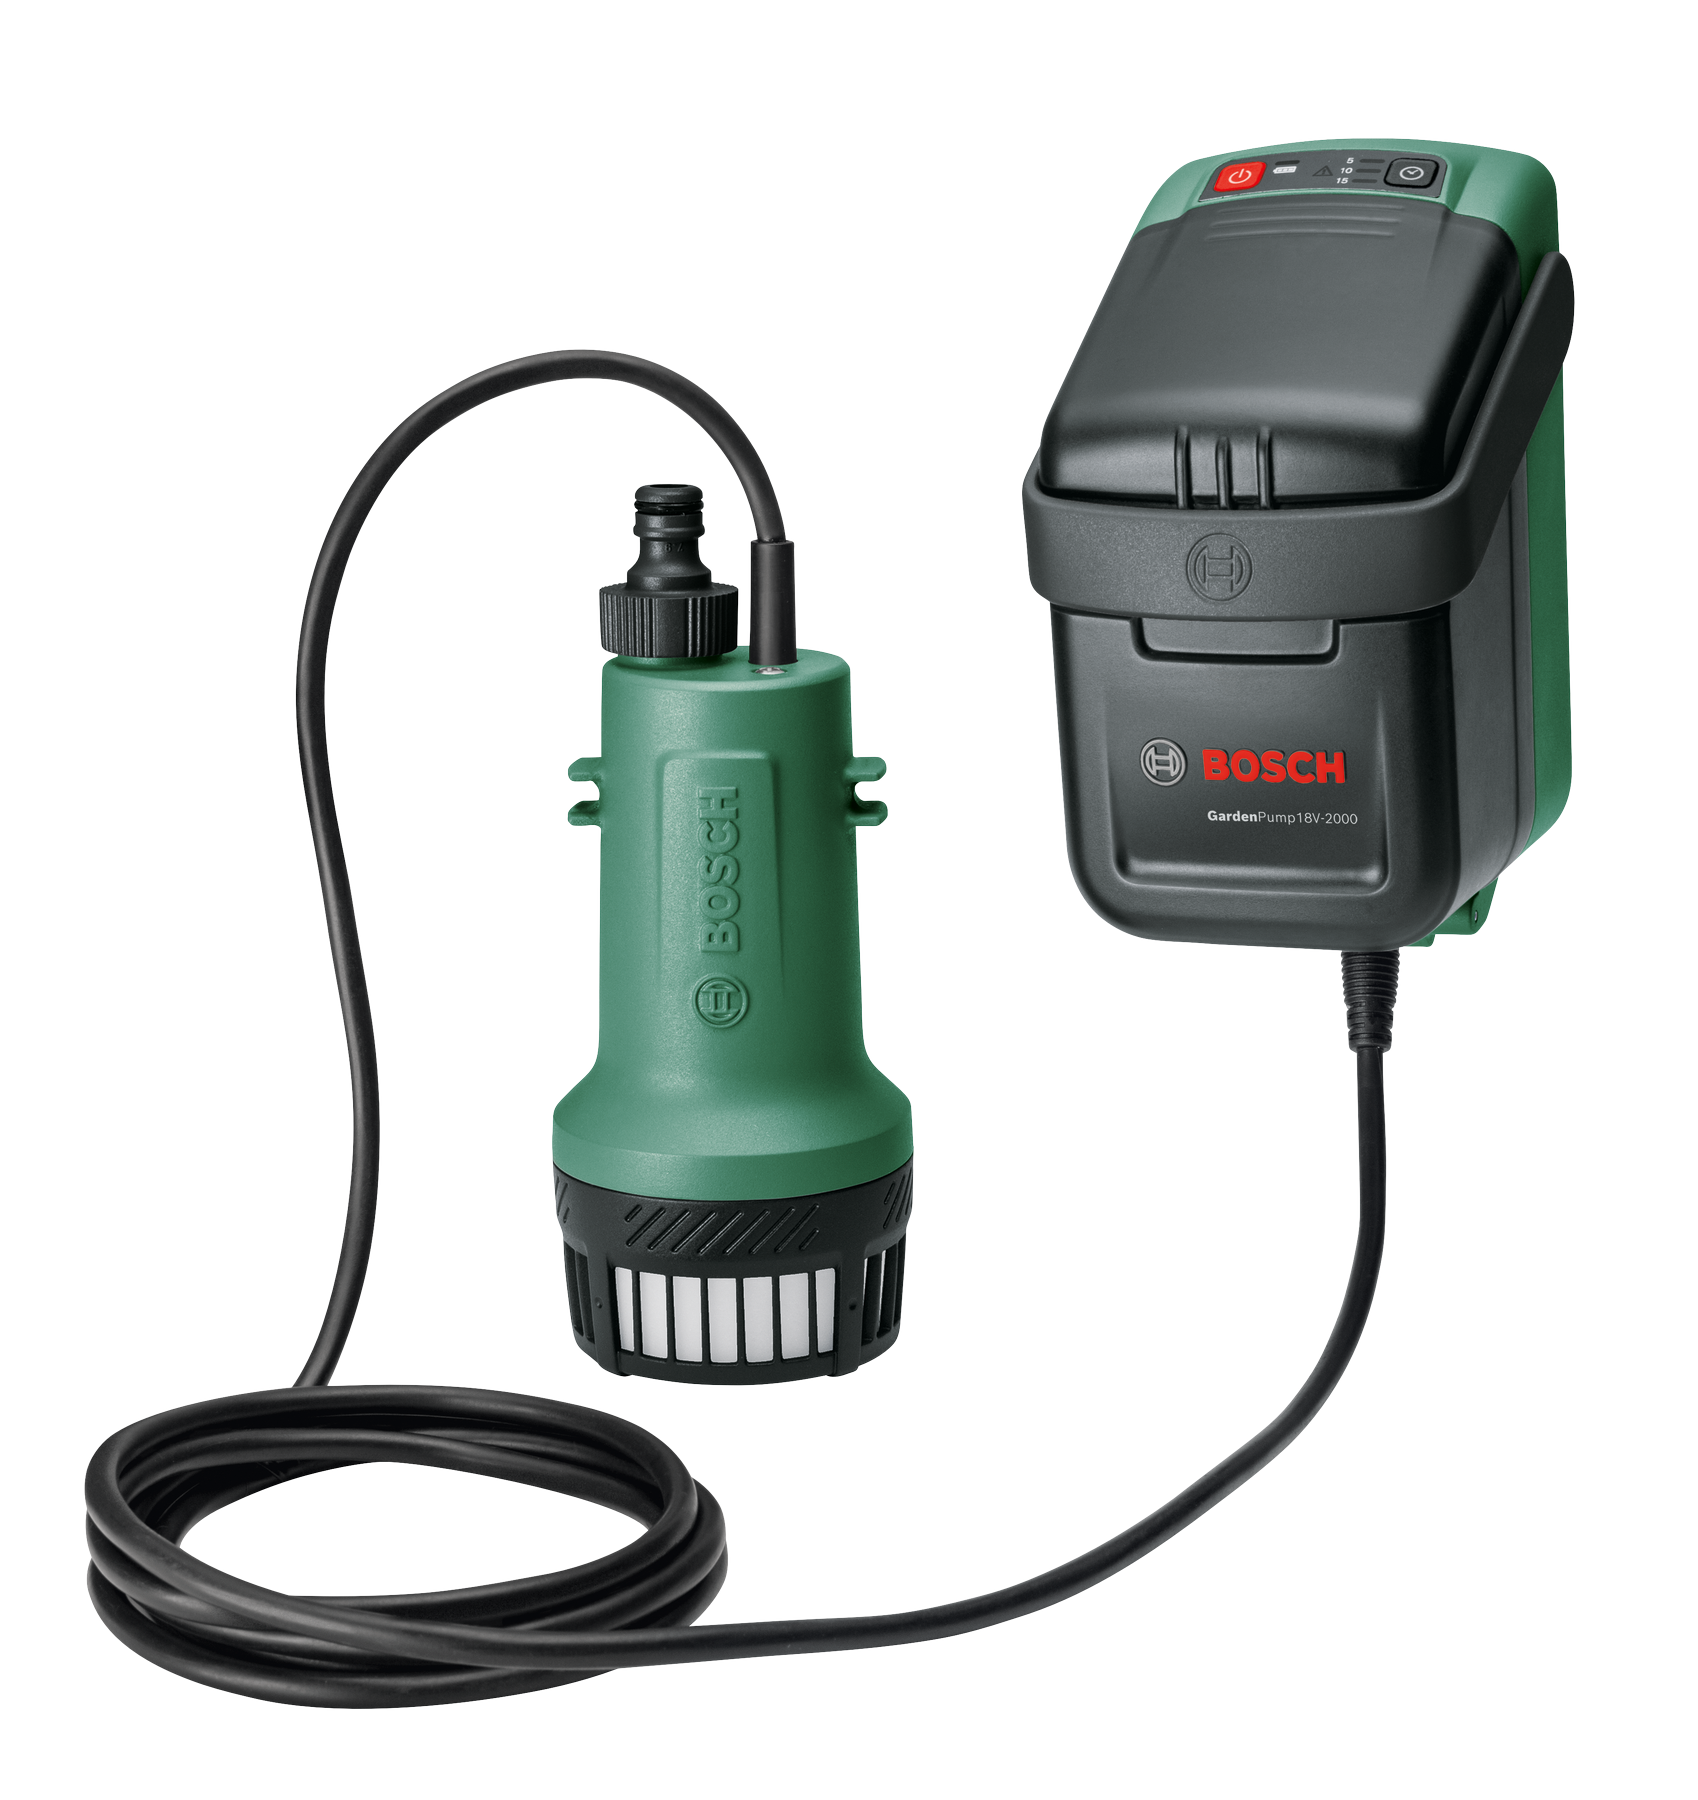 Bosch Power for All 18V Akku-Luftpumpe UniversalPump (18 V, Ohne Akku)